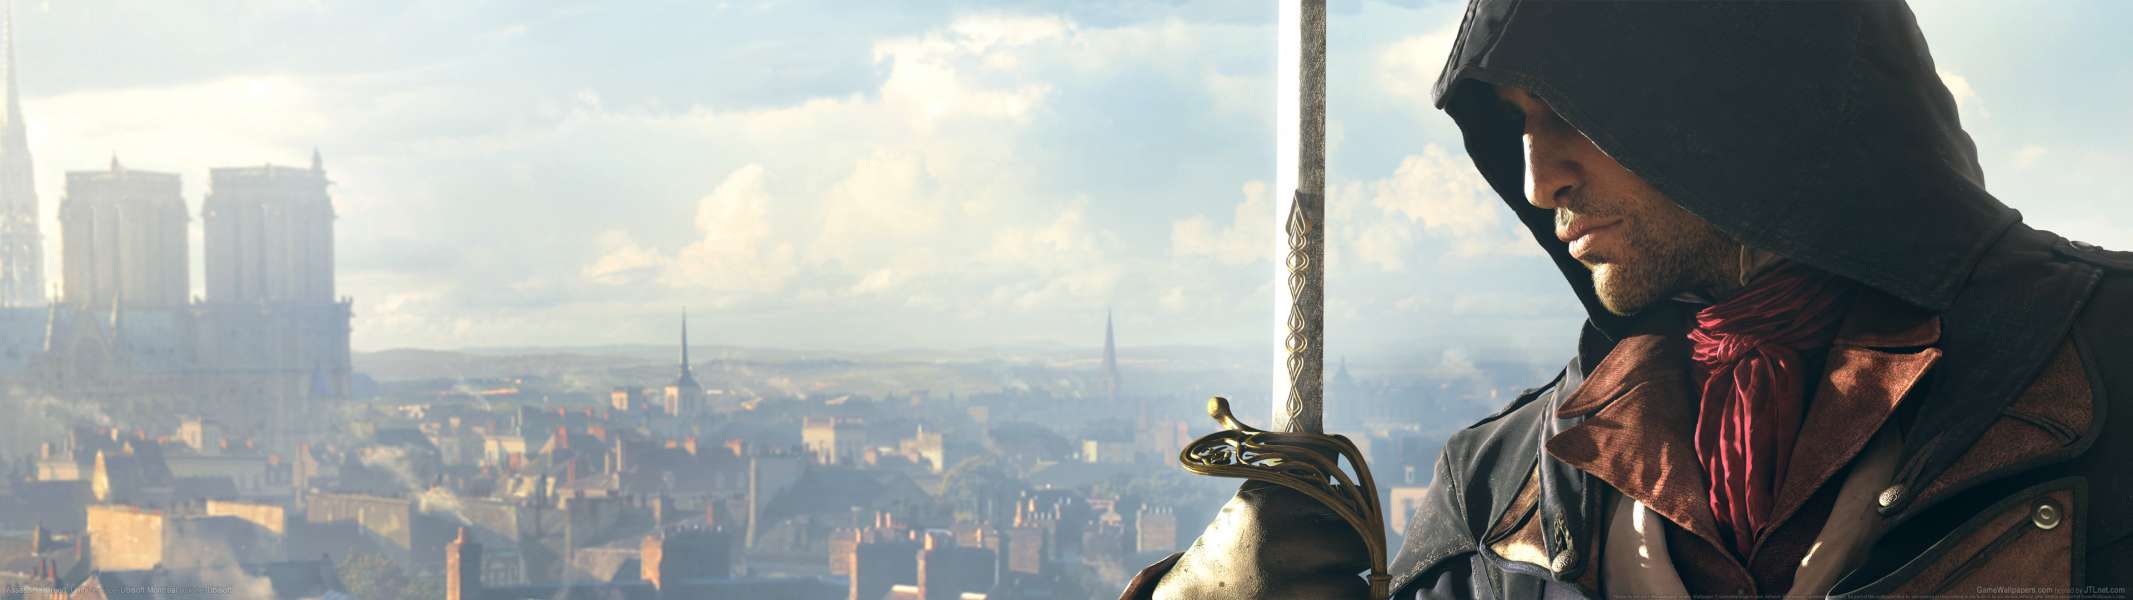 Assassin's Creed: Unity dual screen fondo de escritorio